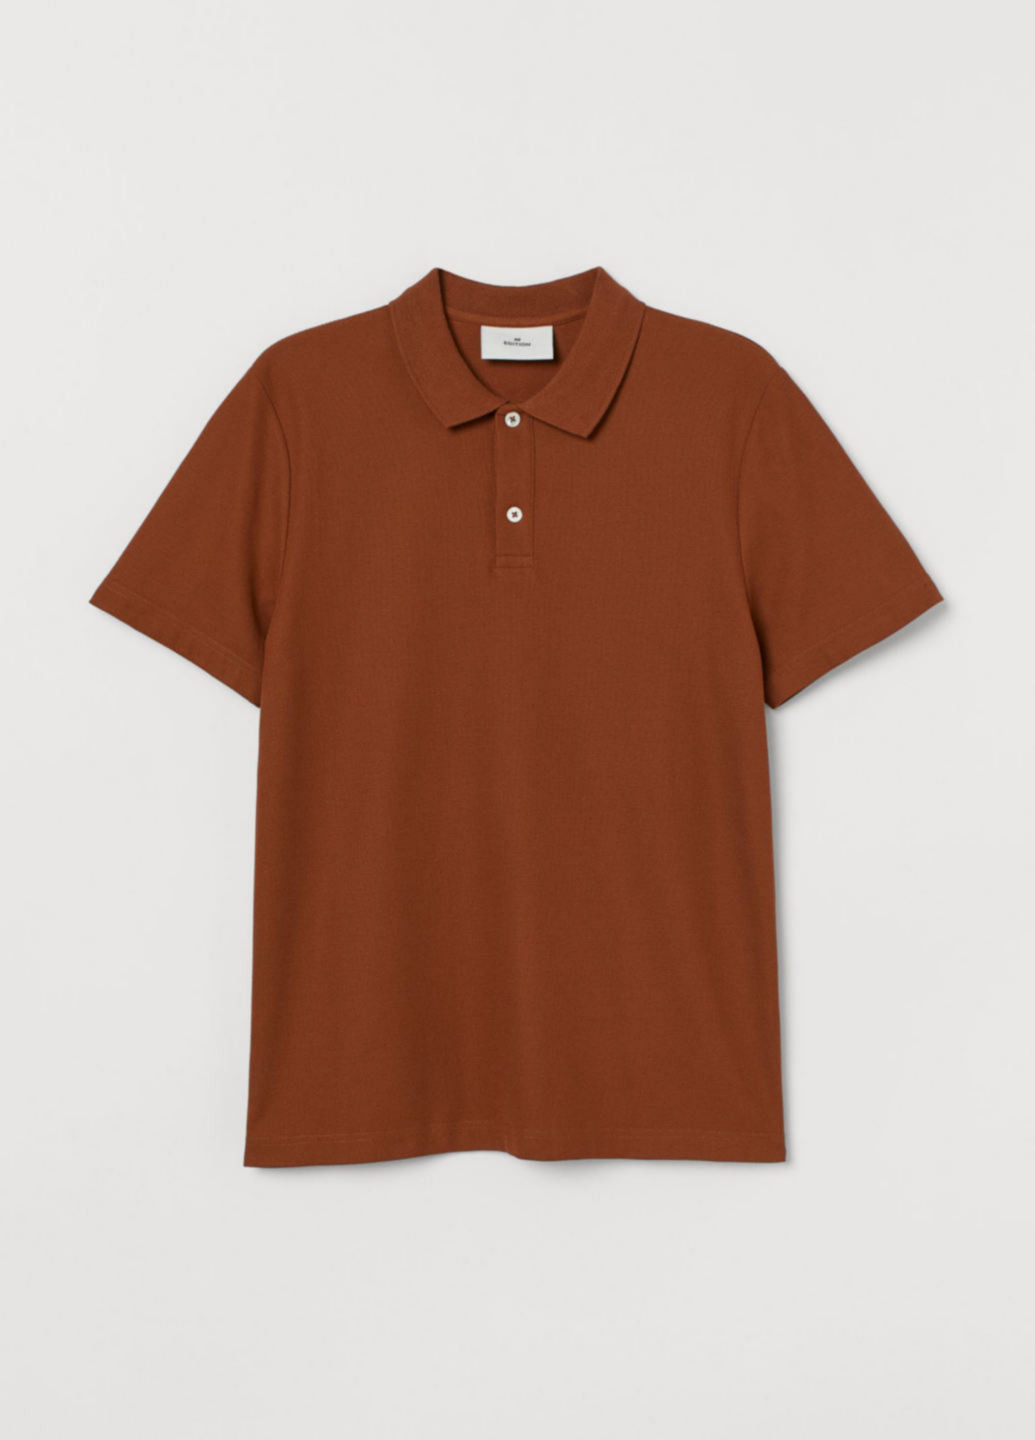 Коричневая футболка-поло для мужчин H&M однотонная